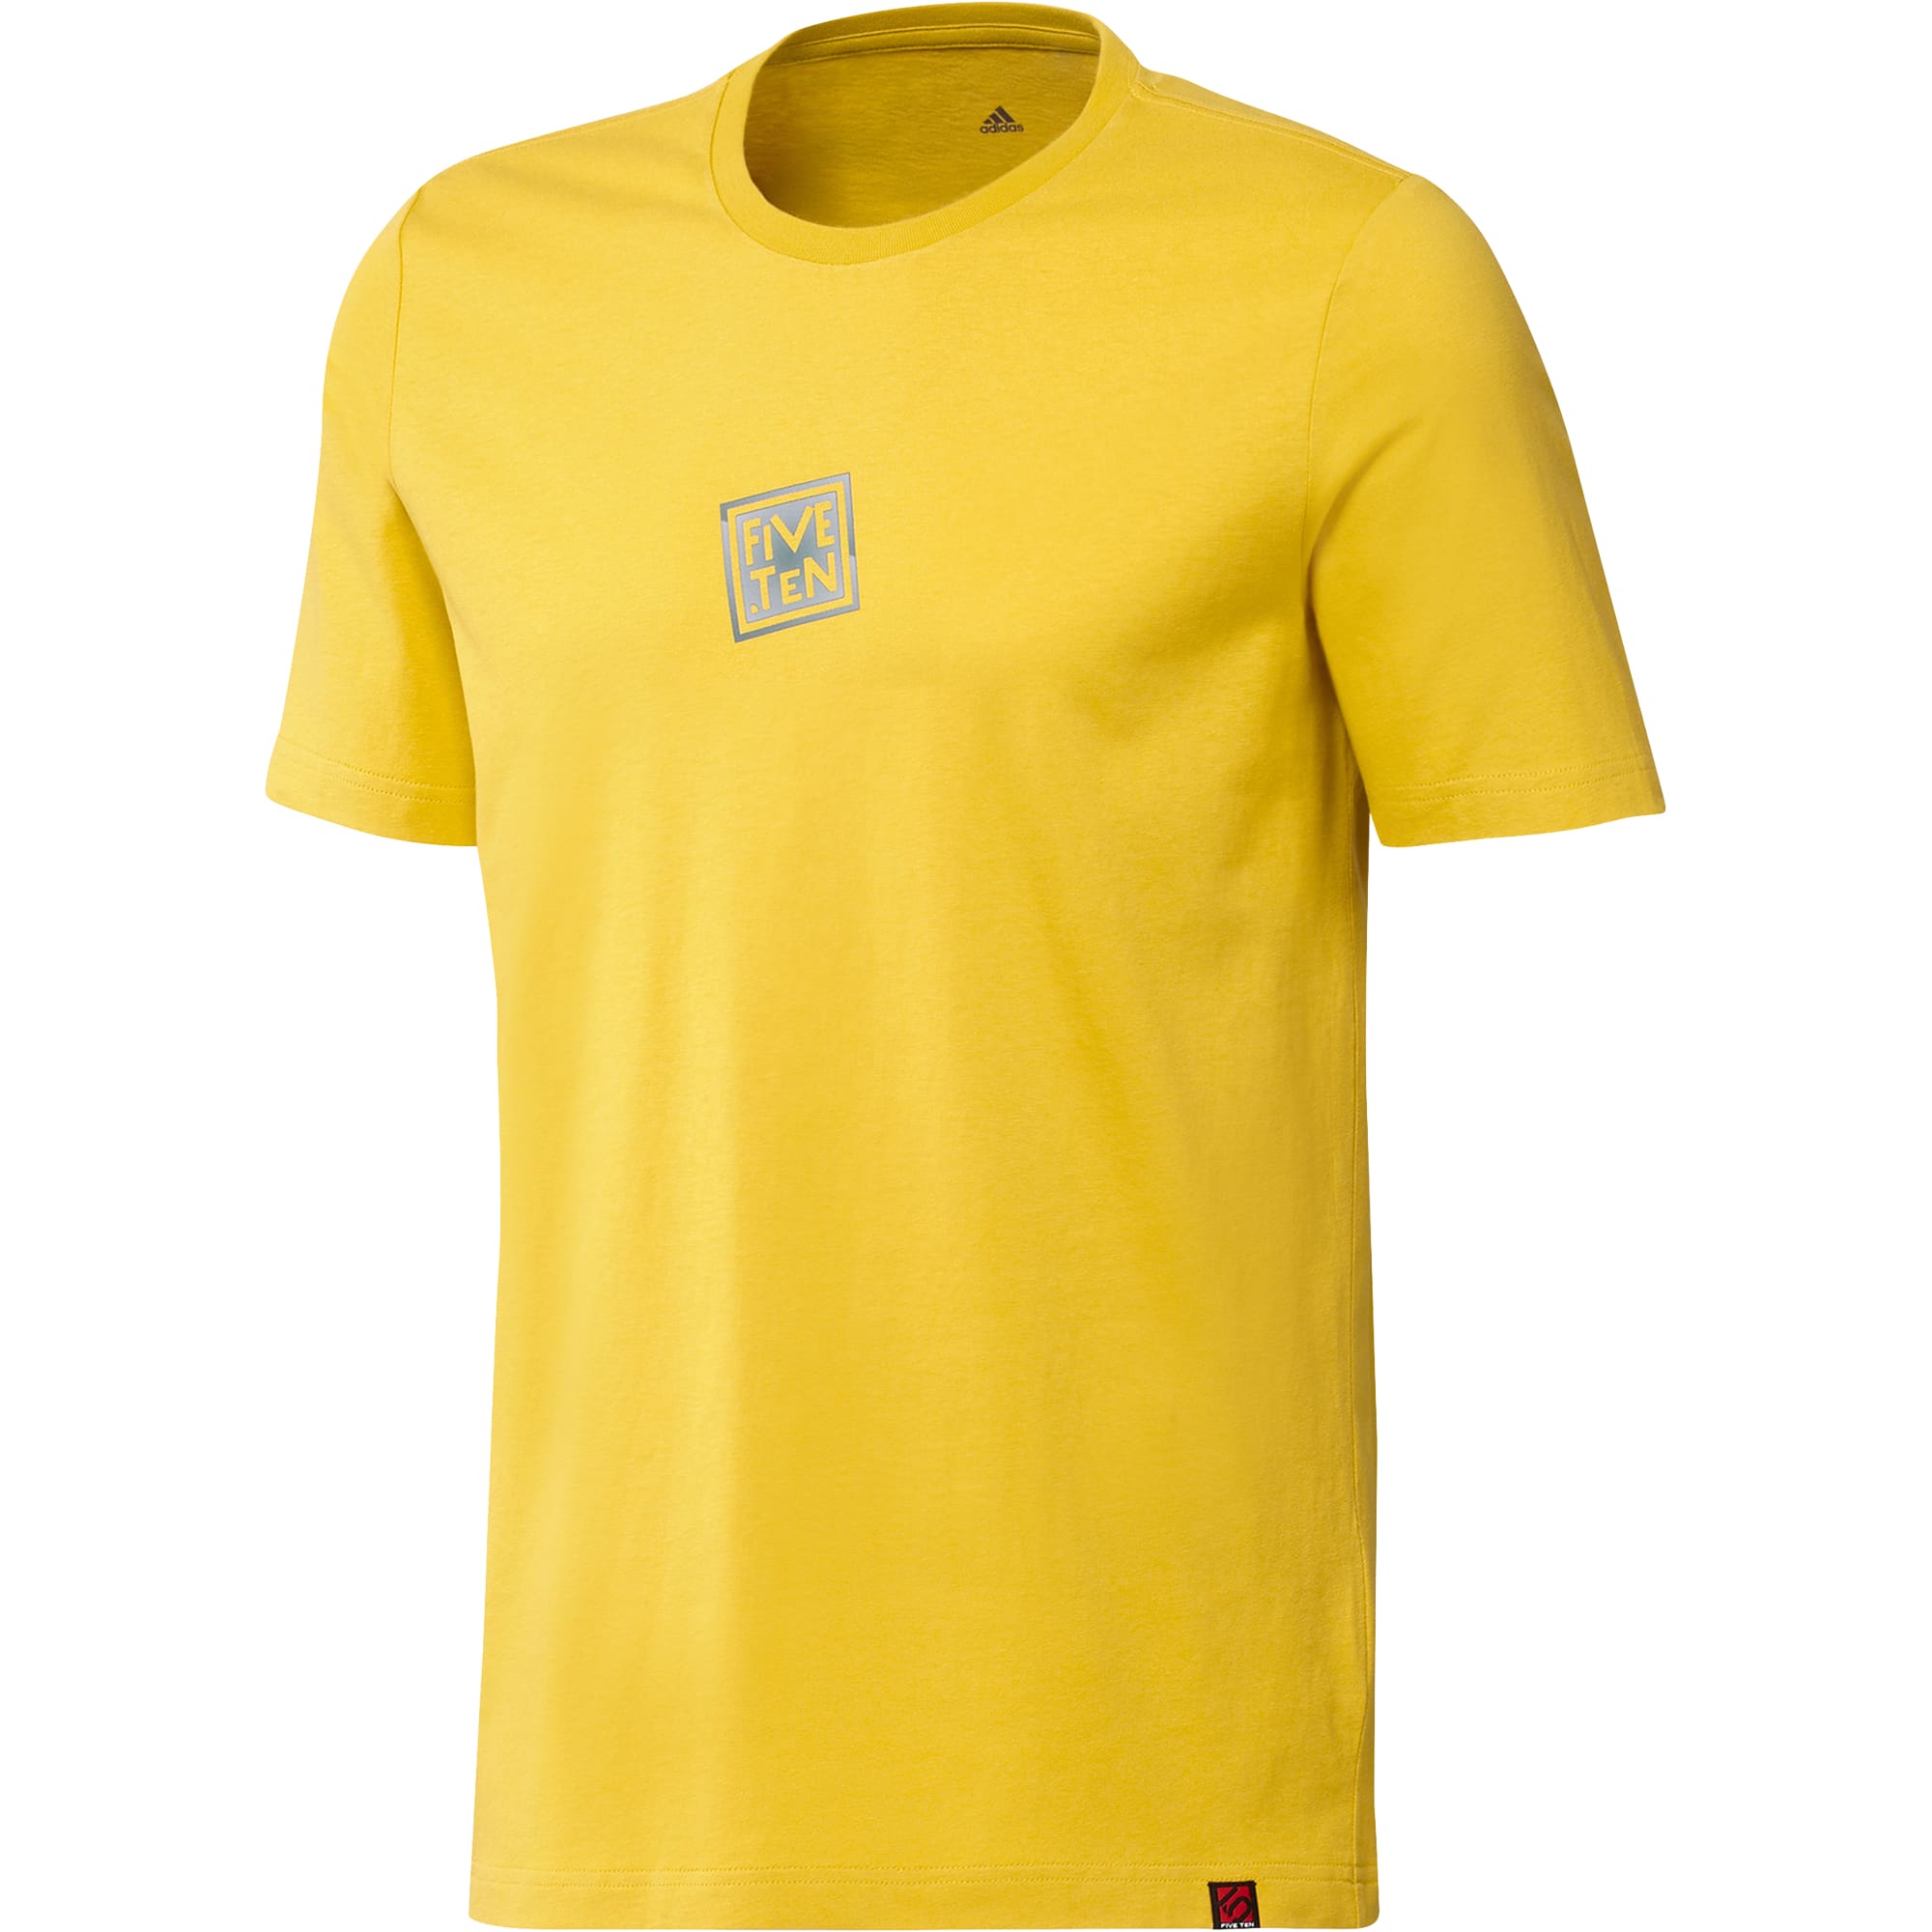 Adidas Men's 5.10 Heritage Logo Tee Hazy Yellow XS, Hazy Yellow